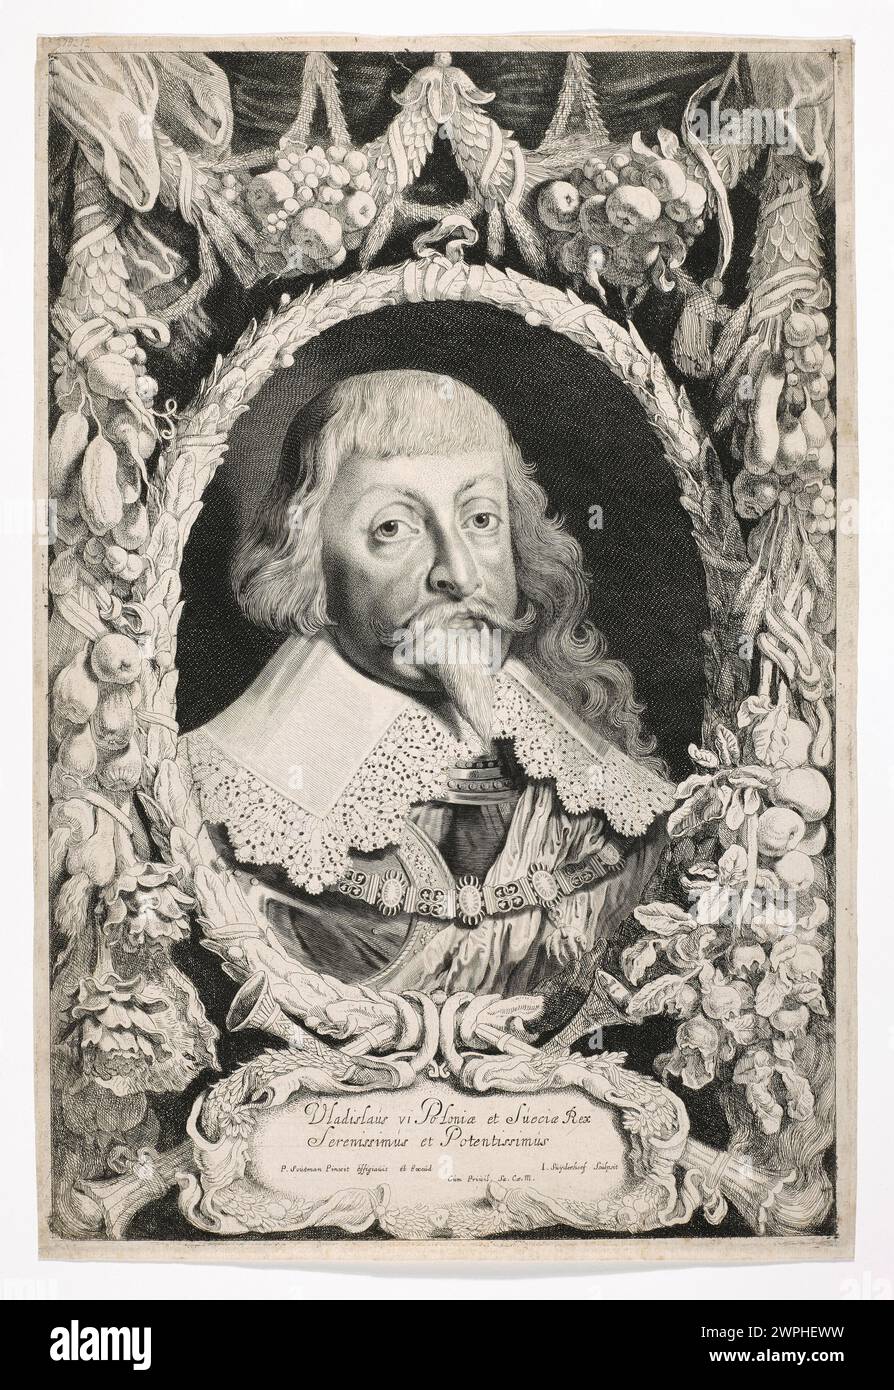 Portrait du vase IV ; Siderderhoef, Jonas (vers 1613-1686), Soutman, Pieter Claesz. (CA 1580-1657) ; 1644-1650 (1644-00-00-1650-00-00) ; ordre de la Runa d'Or, Smolikowski, Seweryn (1809-1897), Smolikowski, Seweryn (1850-1920) - collection, Władysław IV (Roi de Pologne - 1595-1648), Władysław IV (Roi de Pologne - 1595-1648) - iconographie, don ( Protency), Flamand (culture), Girland (ornement), Flamand Graphic, rois, décorations, Polonica, Pologne (culture), buste, portraits, portraits d'hommes, portraits de souverains Banque D'Images